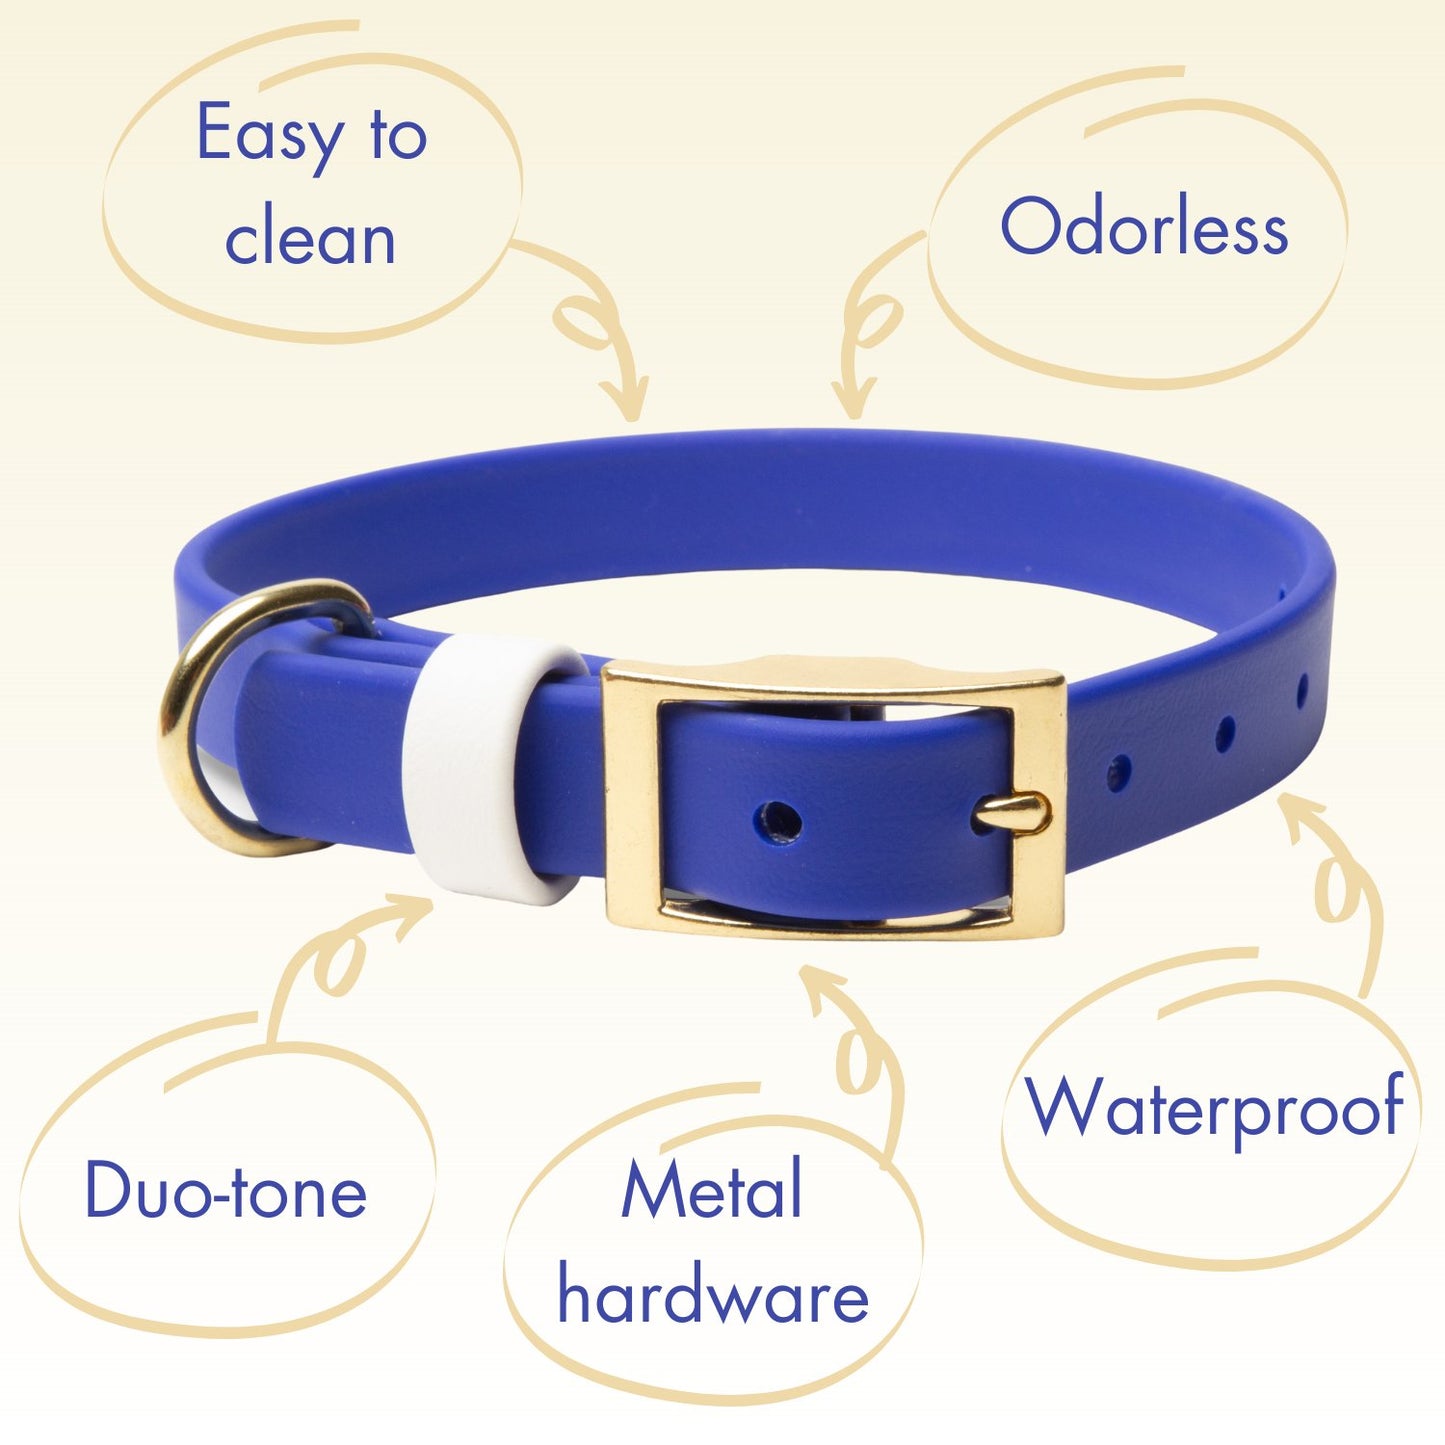 Collars - Biothane Waterproof Dog Collar - Stylish and Smell Free (Blue, White)